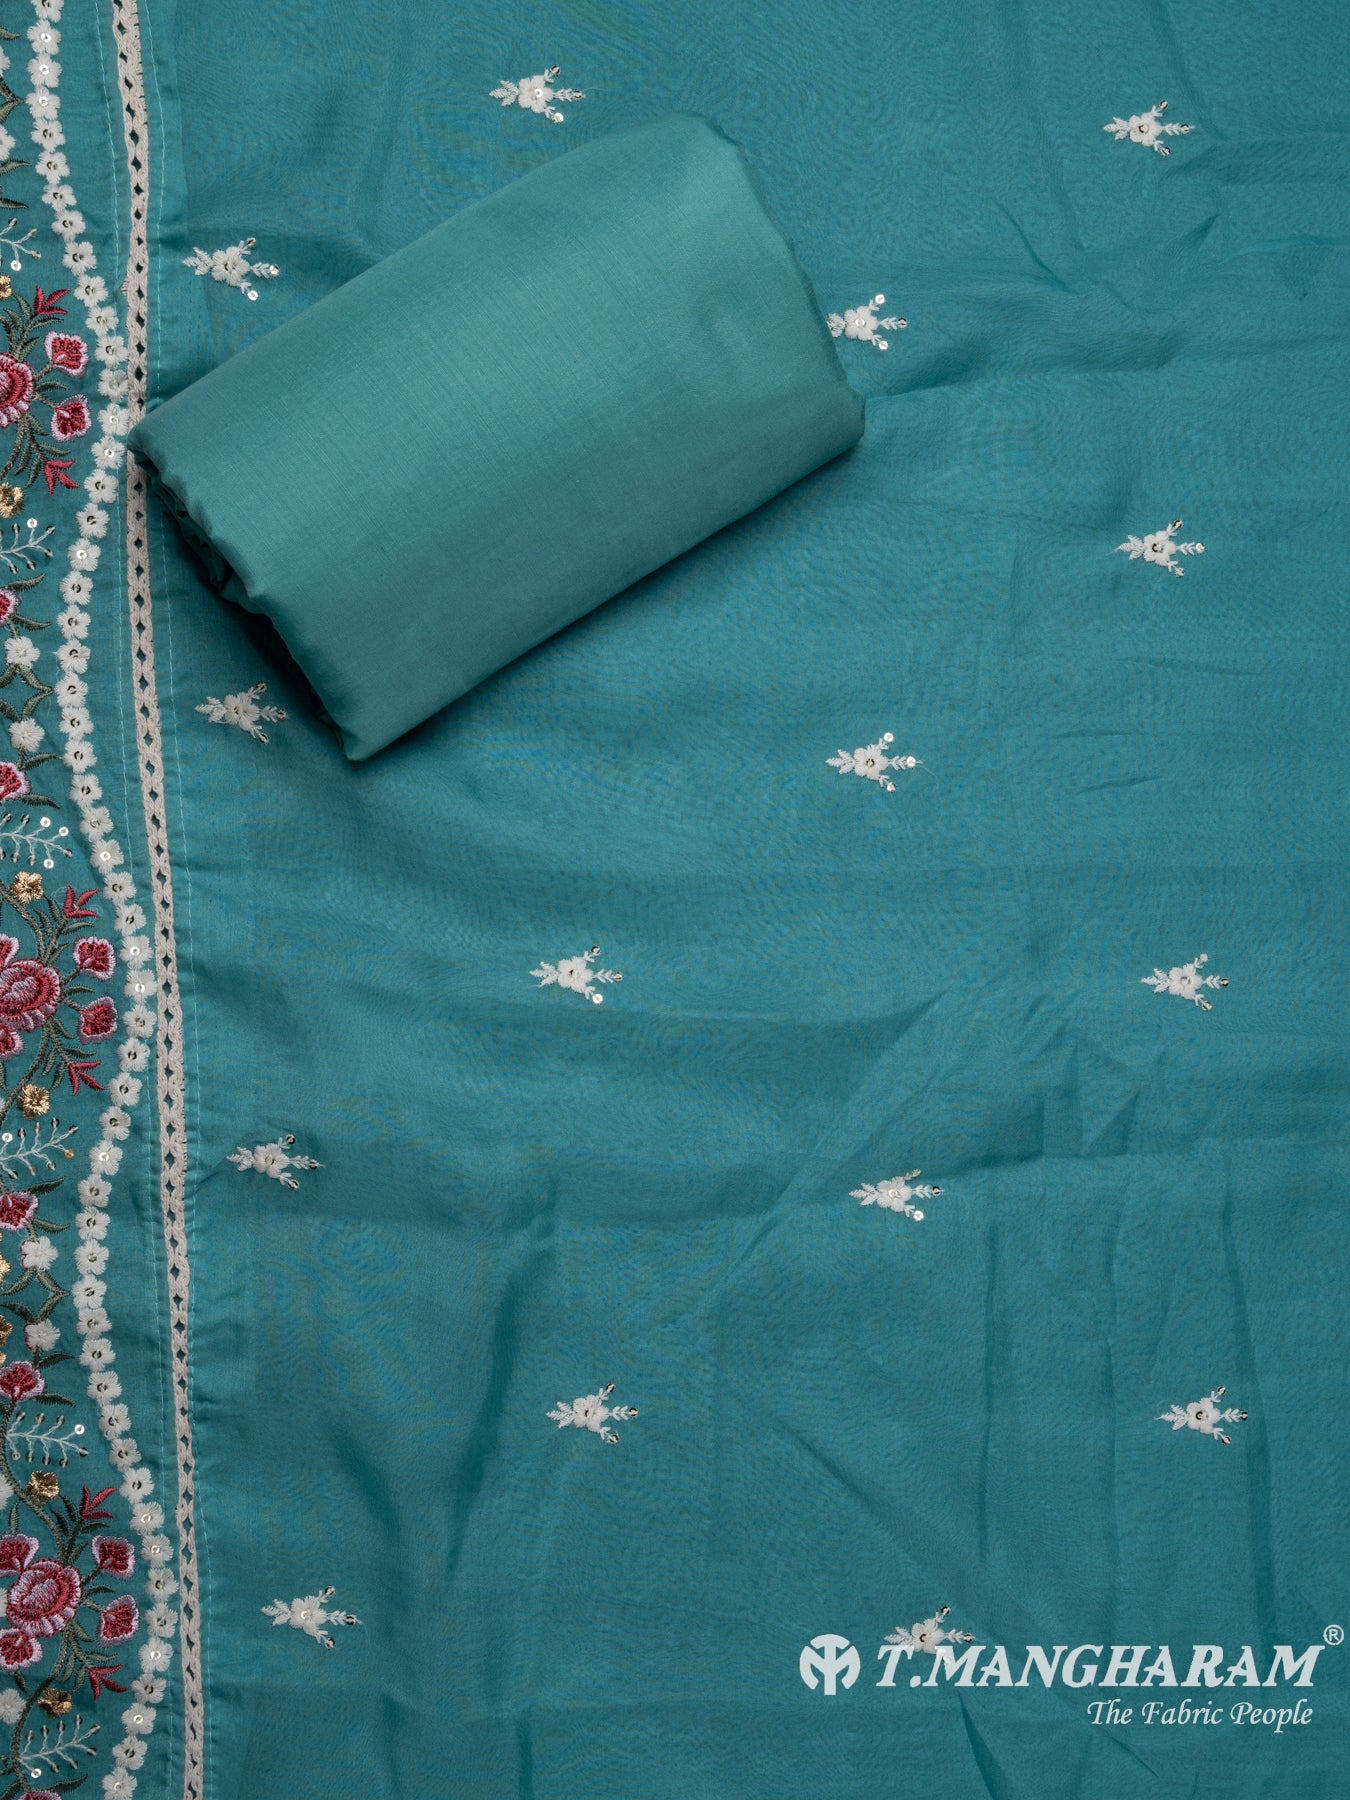 Sea Blue Cotton Chudidhar Fabric Set - EG1629 view-3